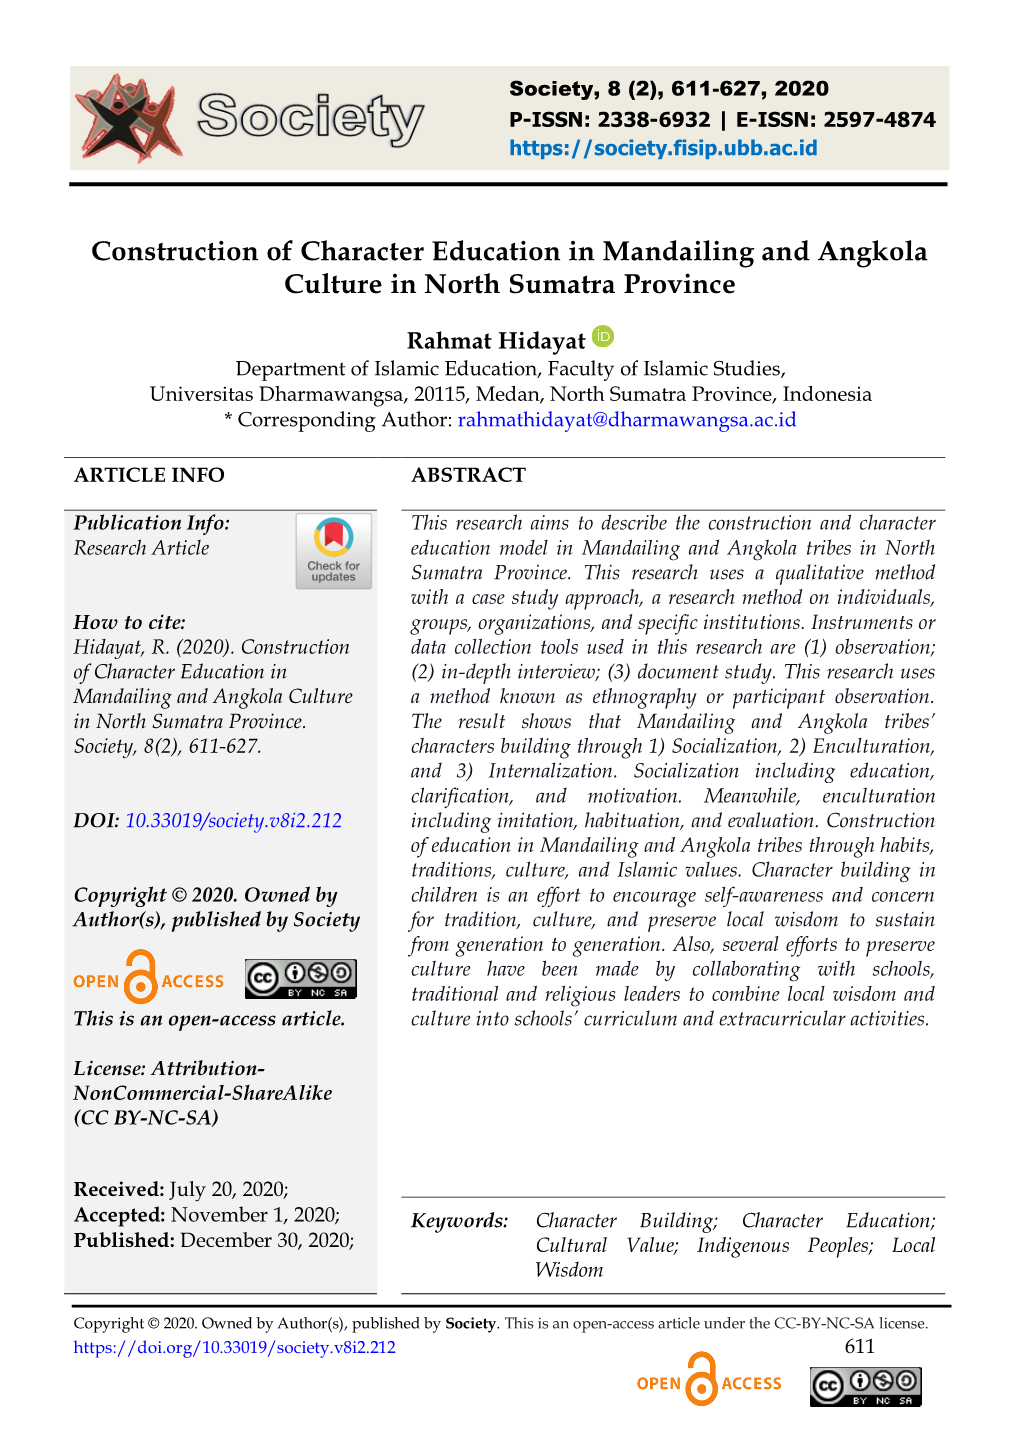 Construction of Character Education in Mandailing and Angkola Culture in North Sumatra Province